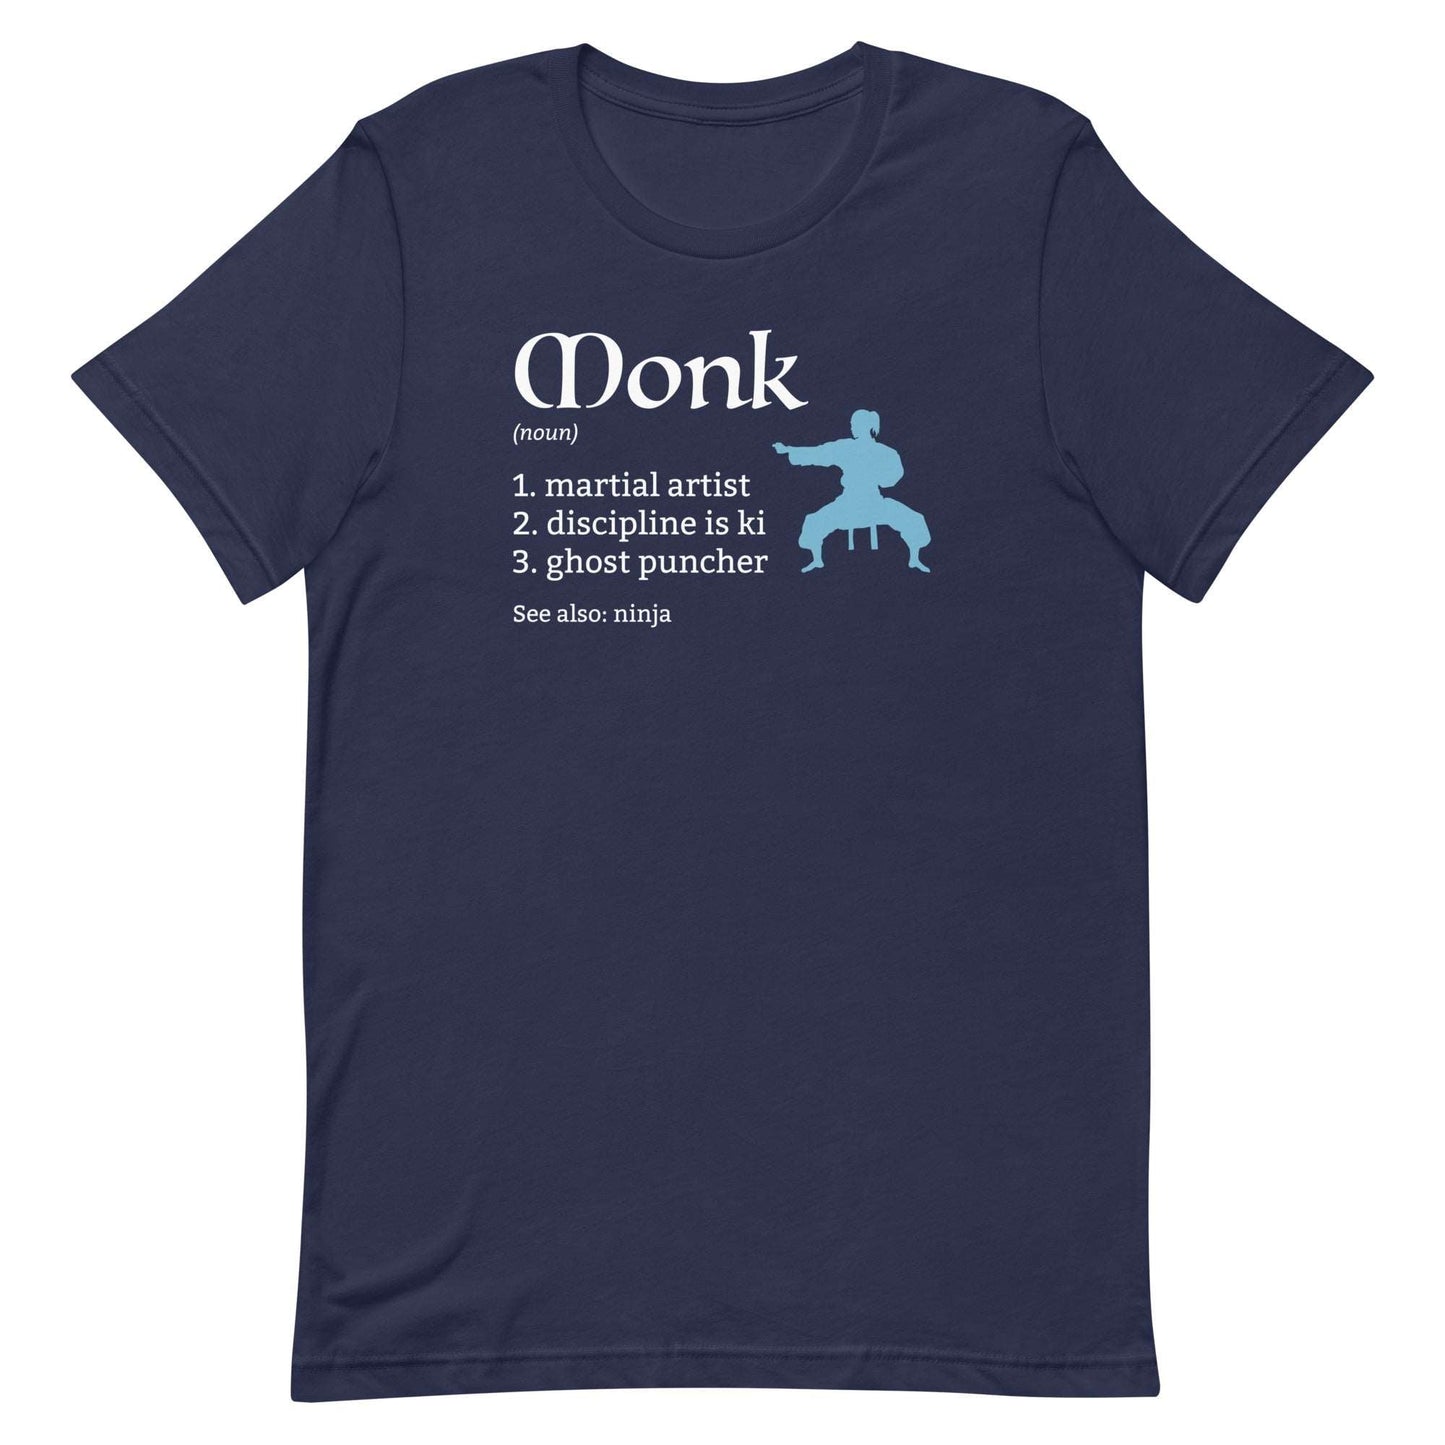 Monk Class Definition T-Shirt – Funny DnD Definition Tee T-Shirt Navy / S